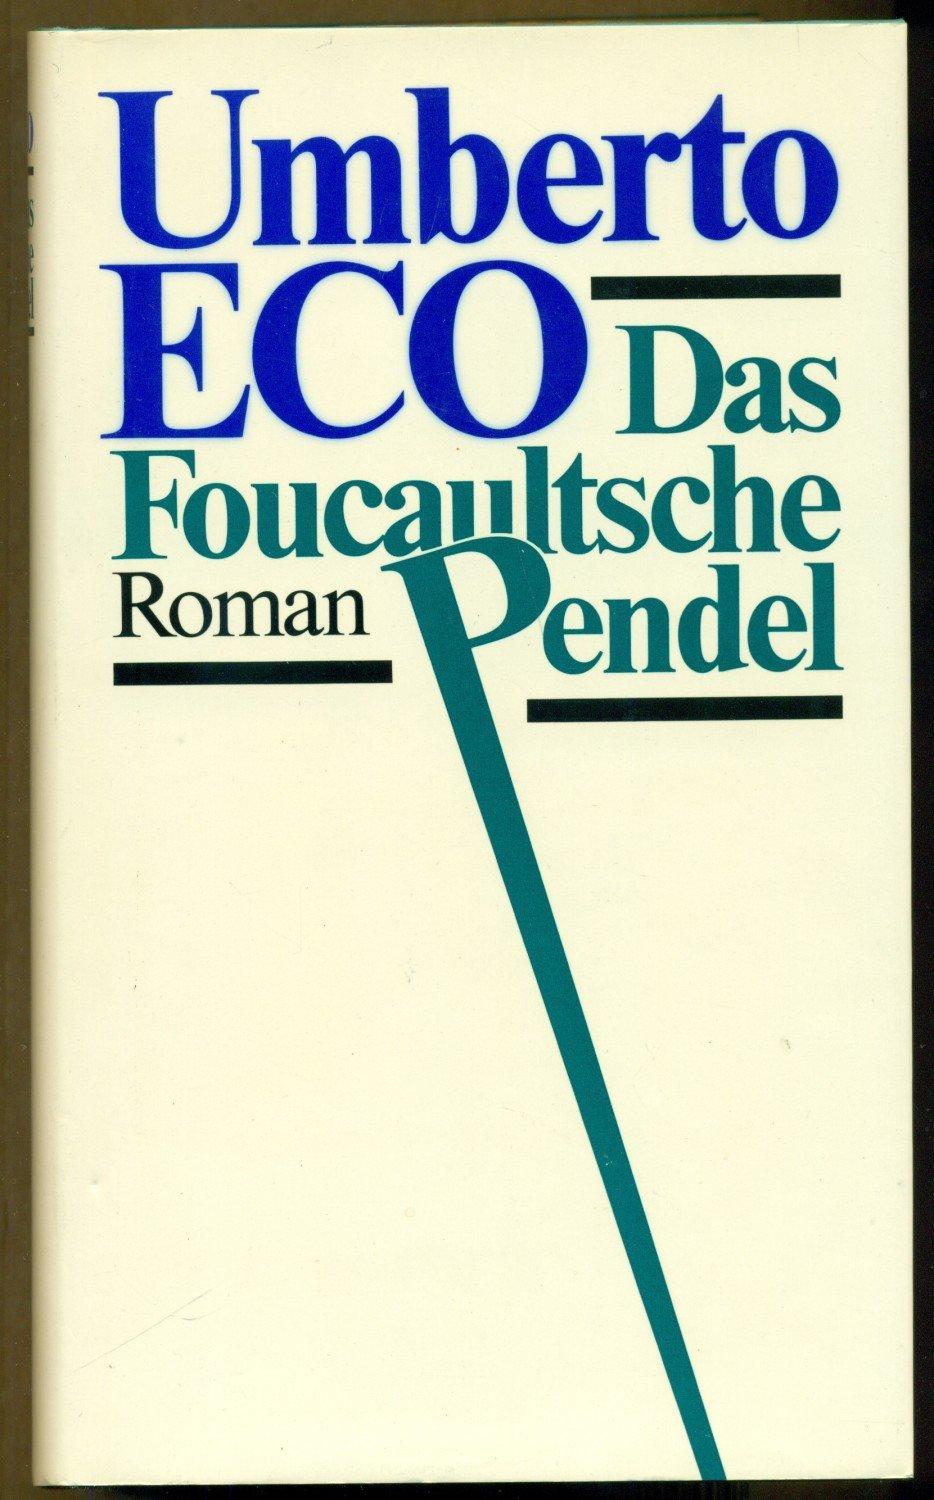 Das Foucaultsche Pendel (German language, 1989, Club Bertelsmann)